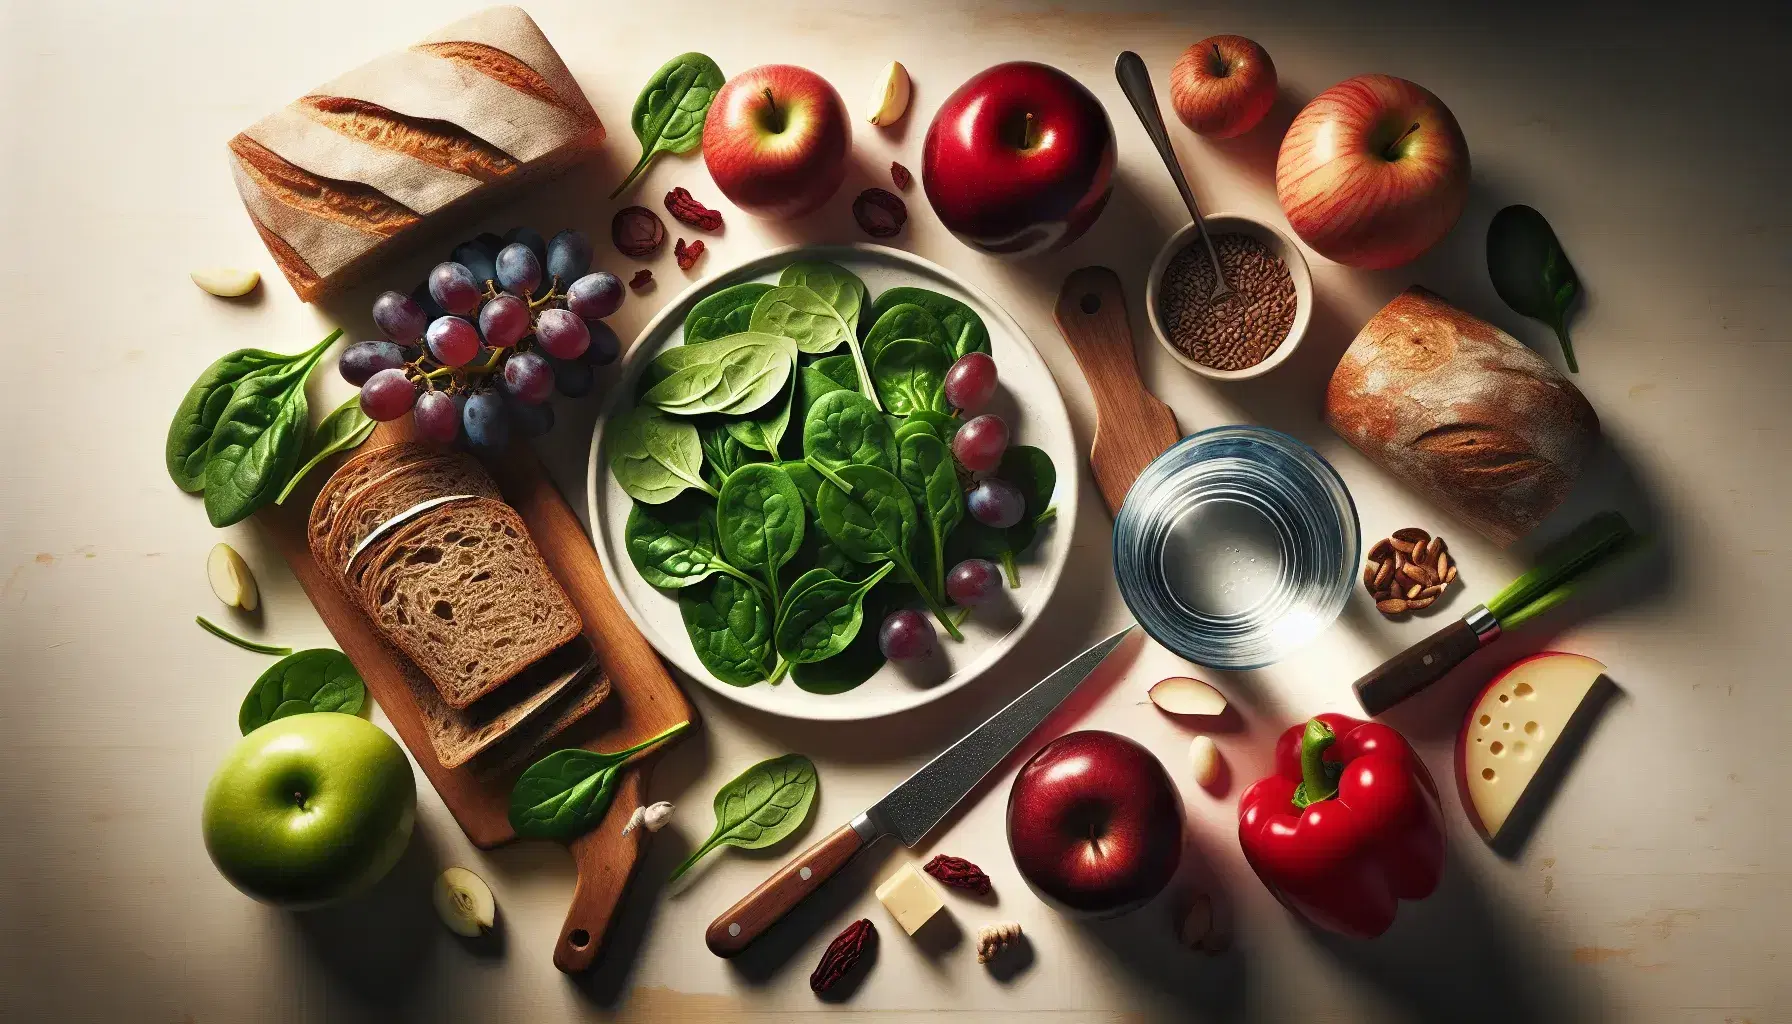 Mesa de madera clara con alimentos frescos, plato con espinacas, uvas rojas, manzana roja, vaso de agua, cuchillo, pan integral y queso amarillo.